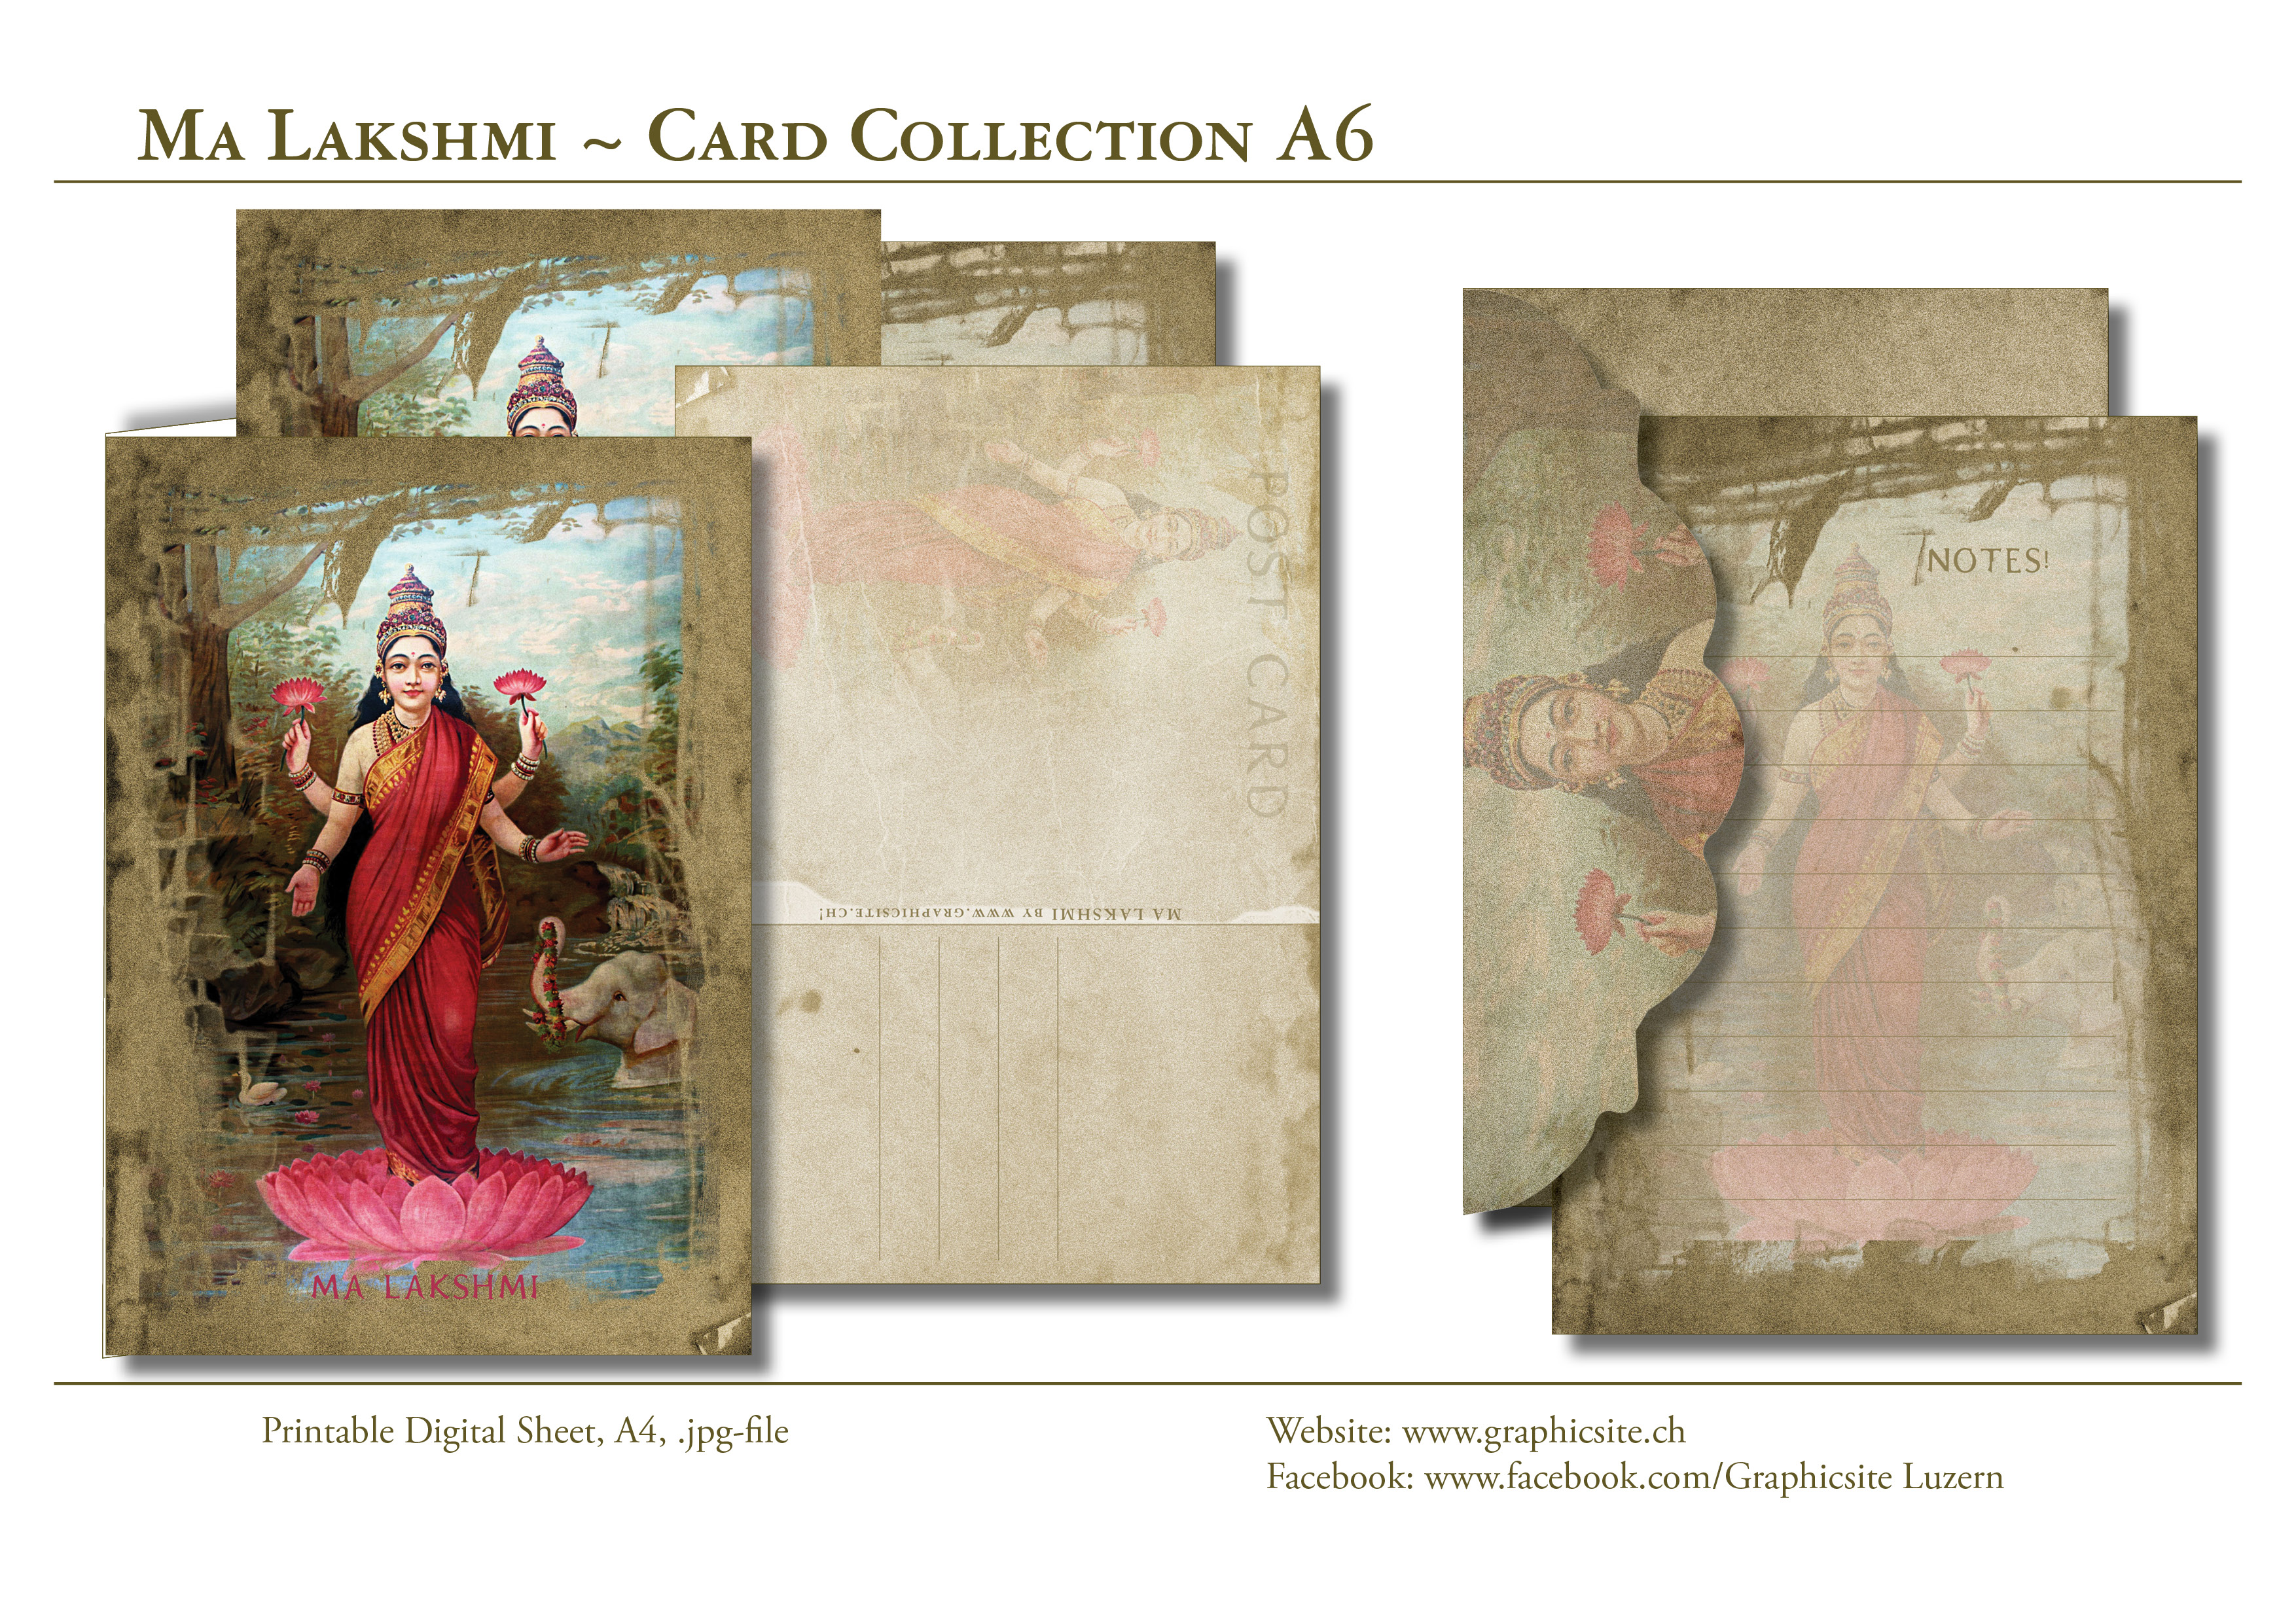 Printable Digital Sheets, Greeting Card, Postcard, India, Goddess, Lakshmi, Envelop, Graphic Design, Luzern